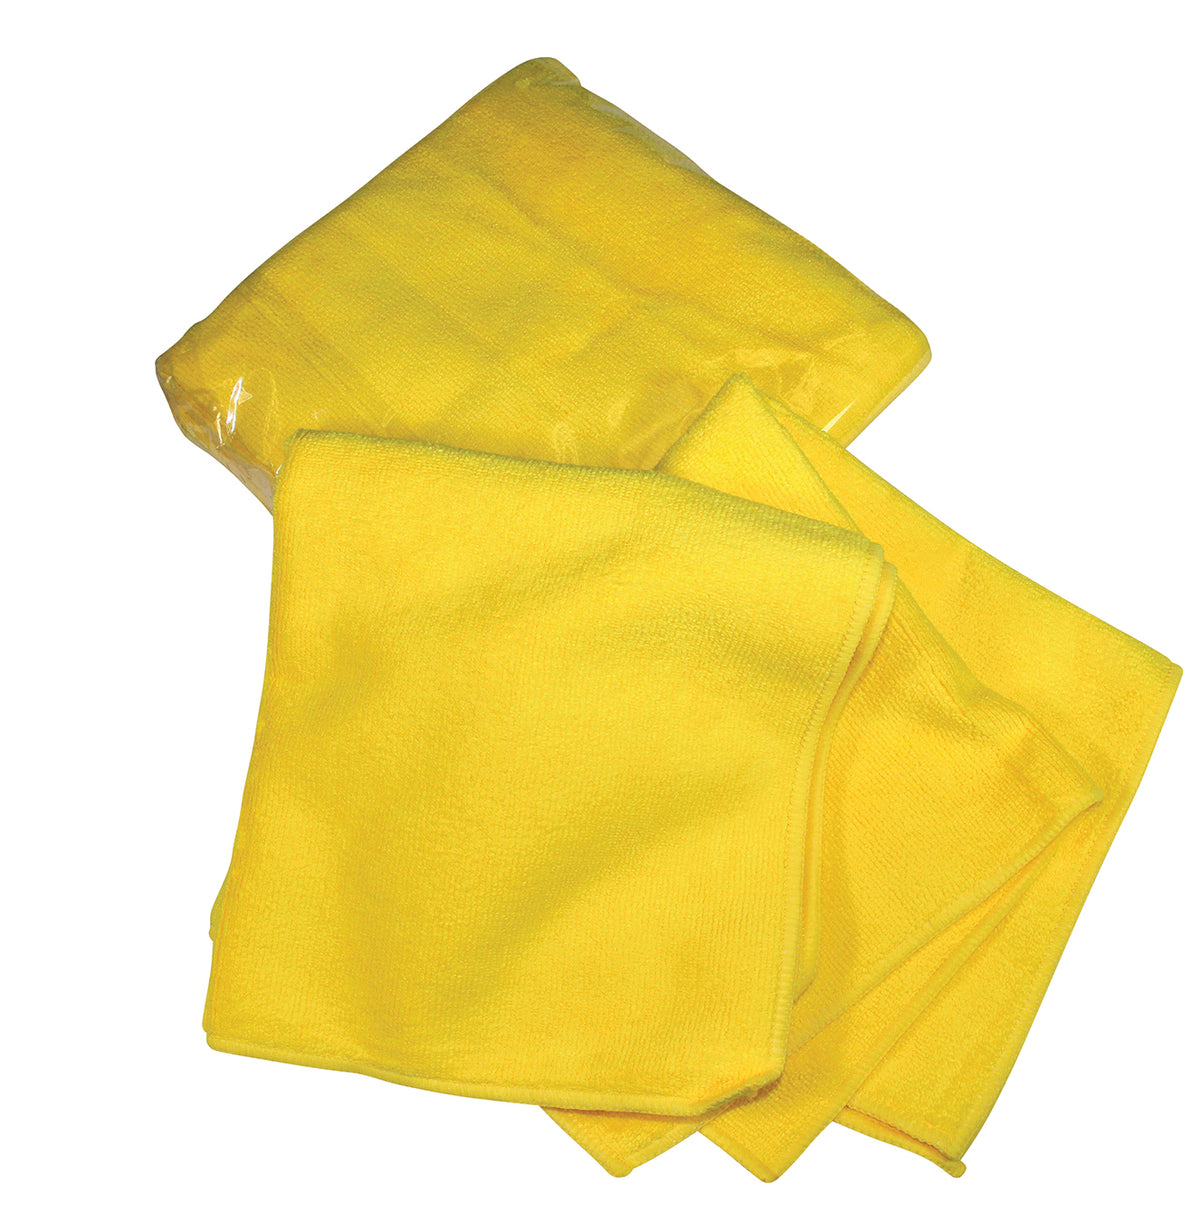 16 inch by 16 inch yellow microfiber detailing towel. www.flywheelnw.com